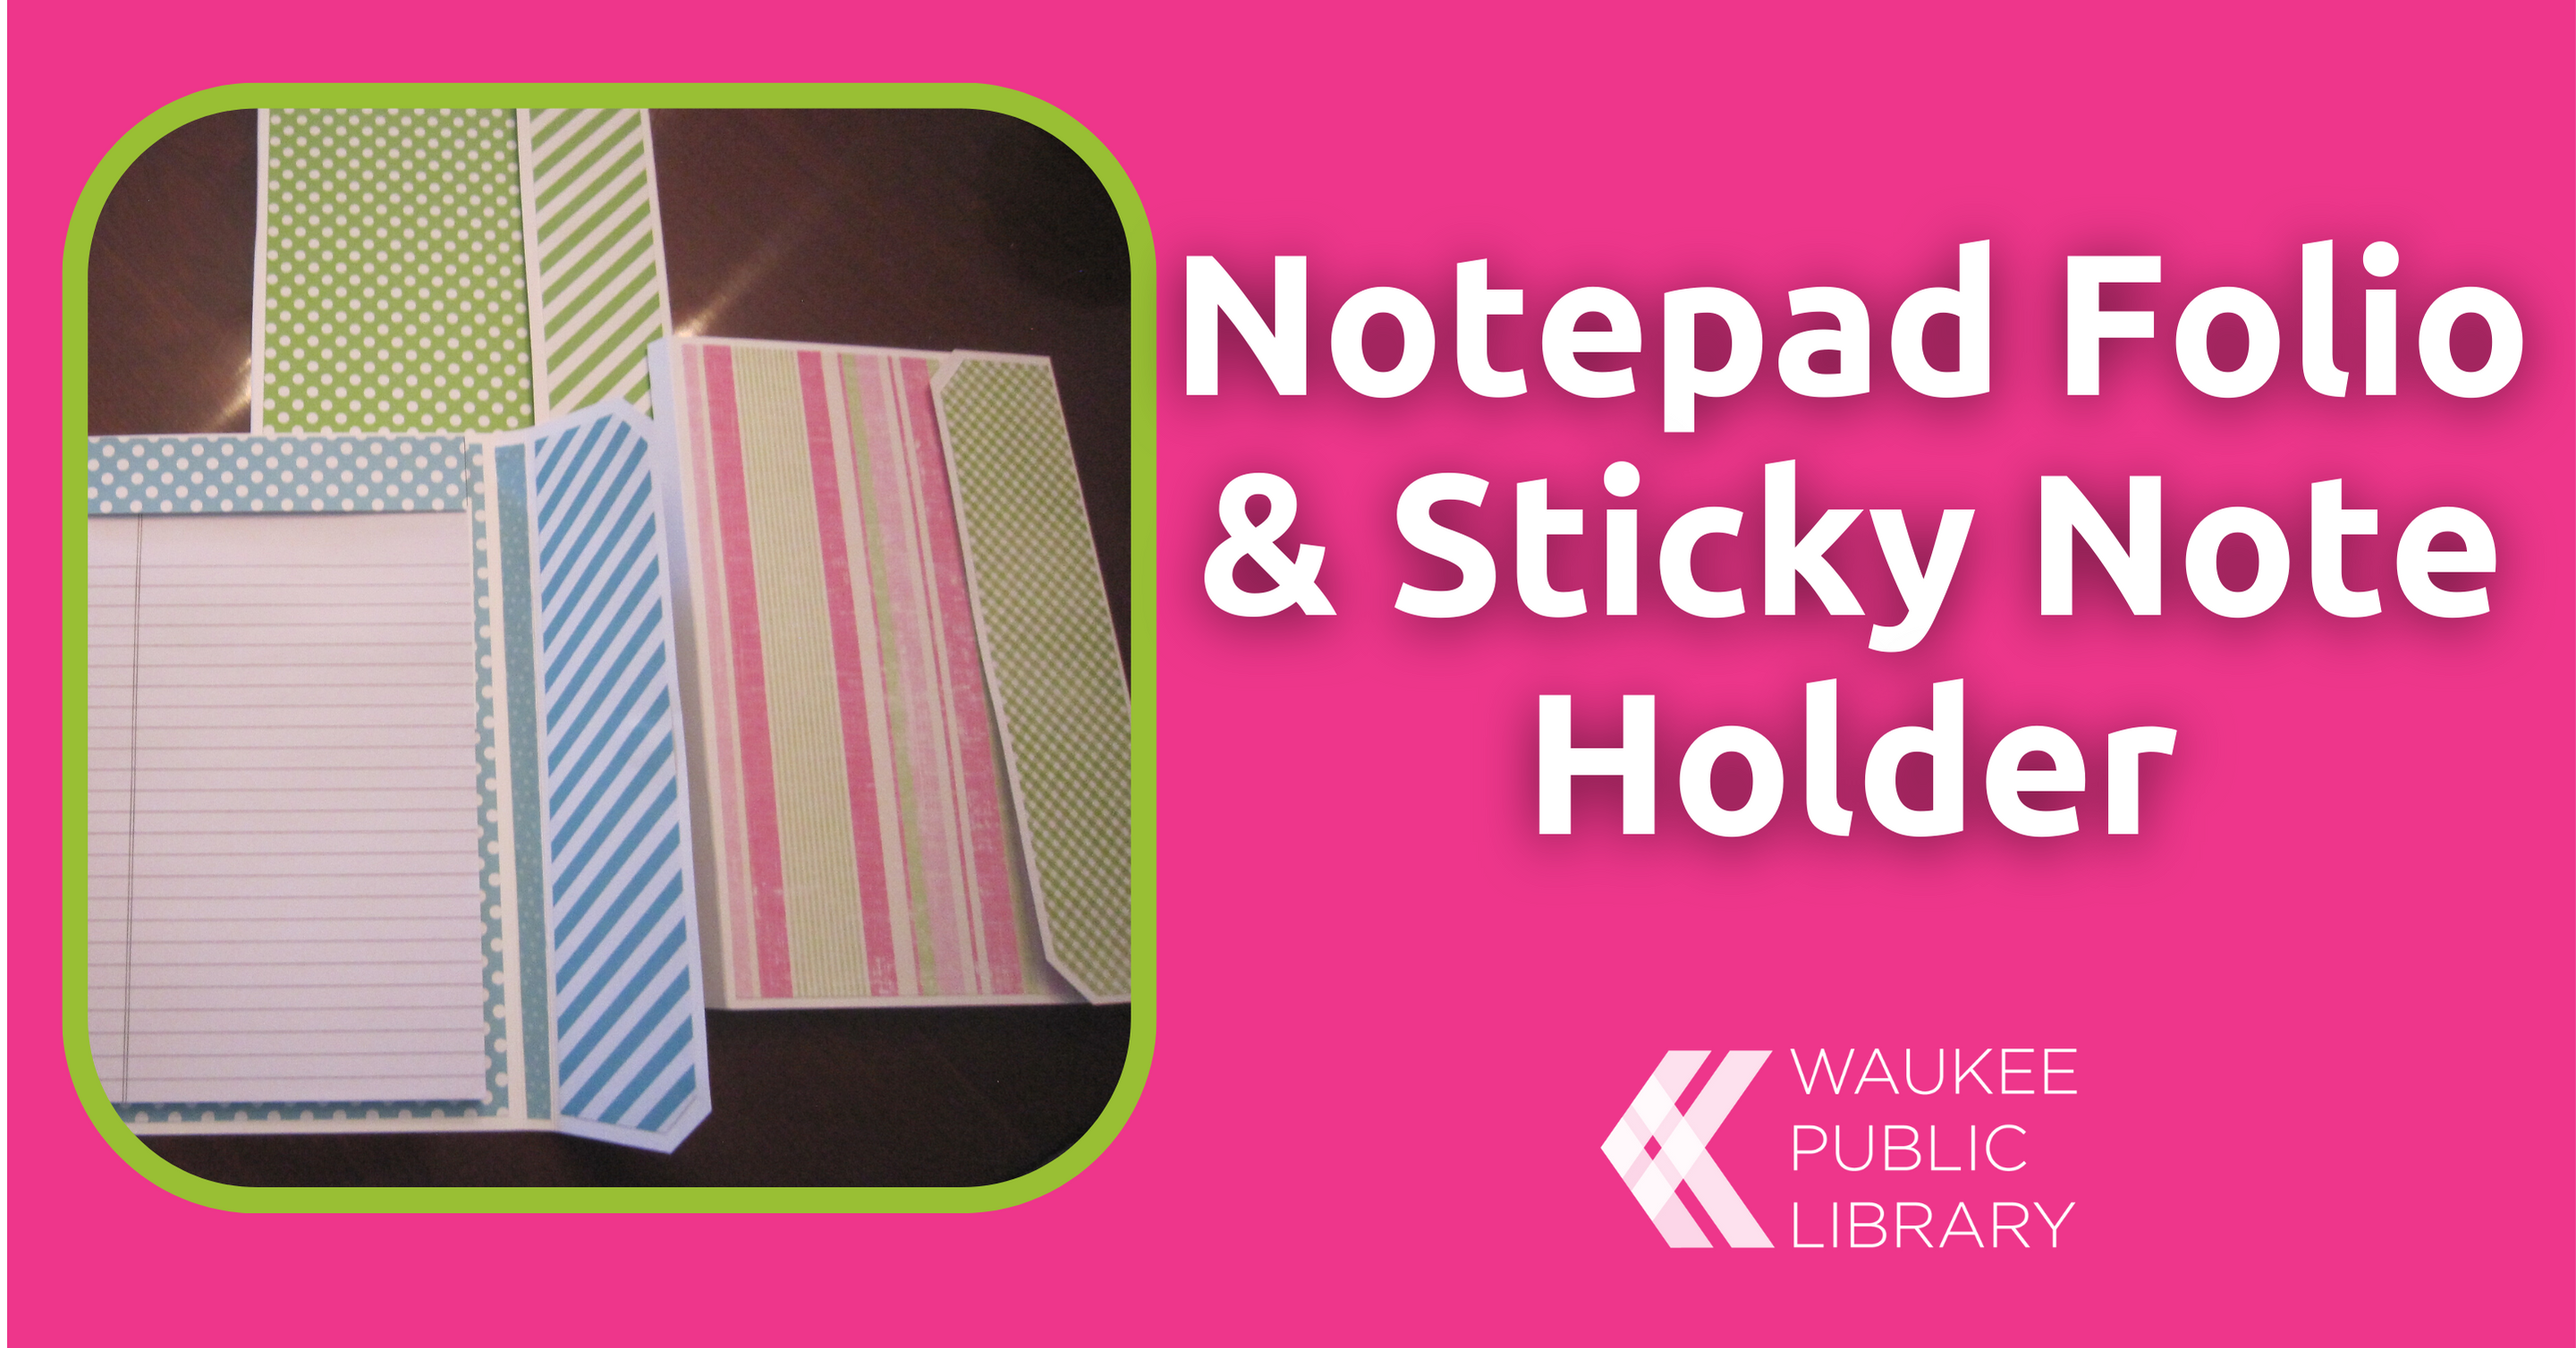 Notepad Folio & Sticky Note Holder